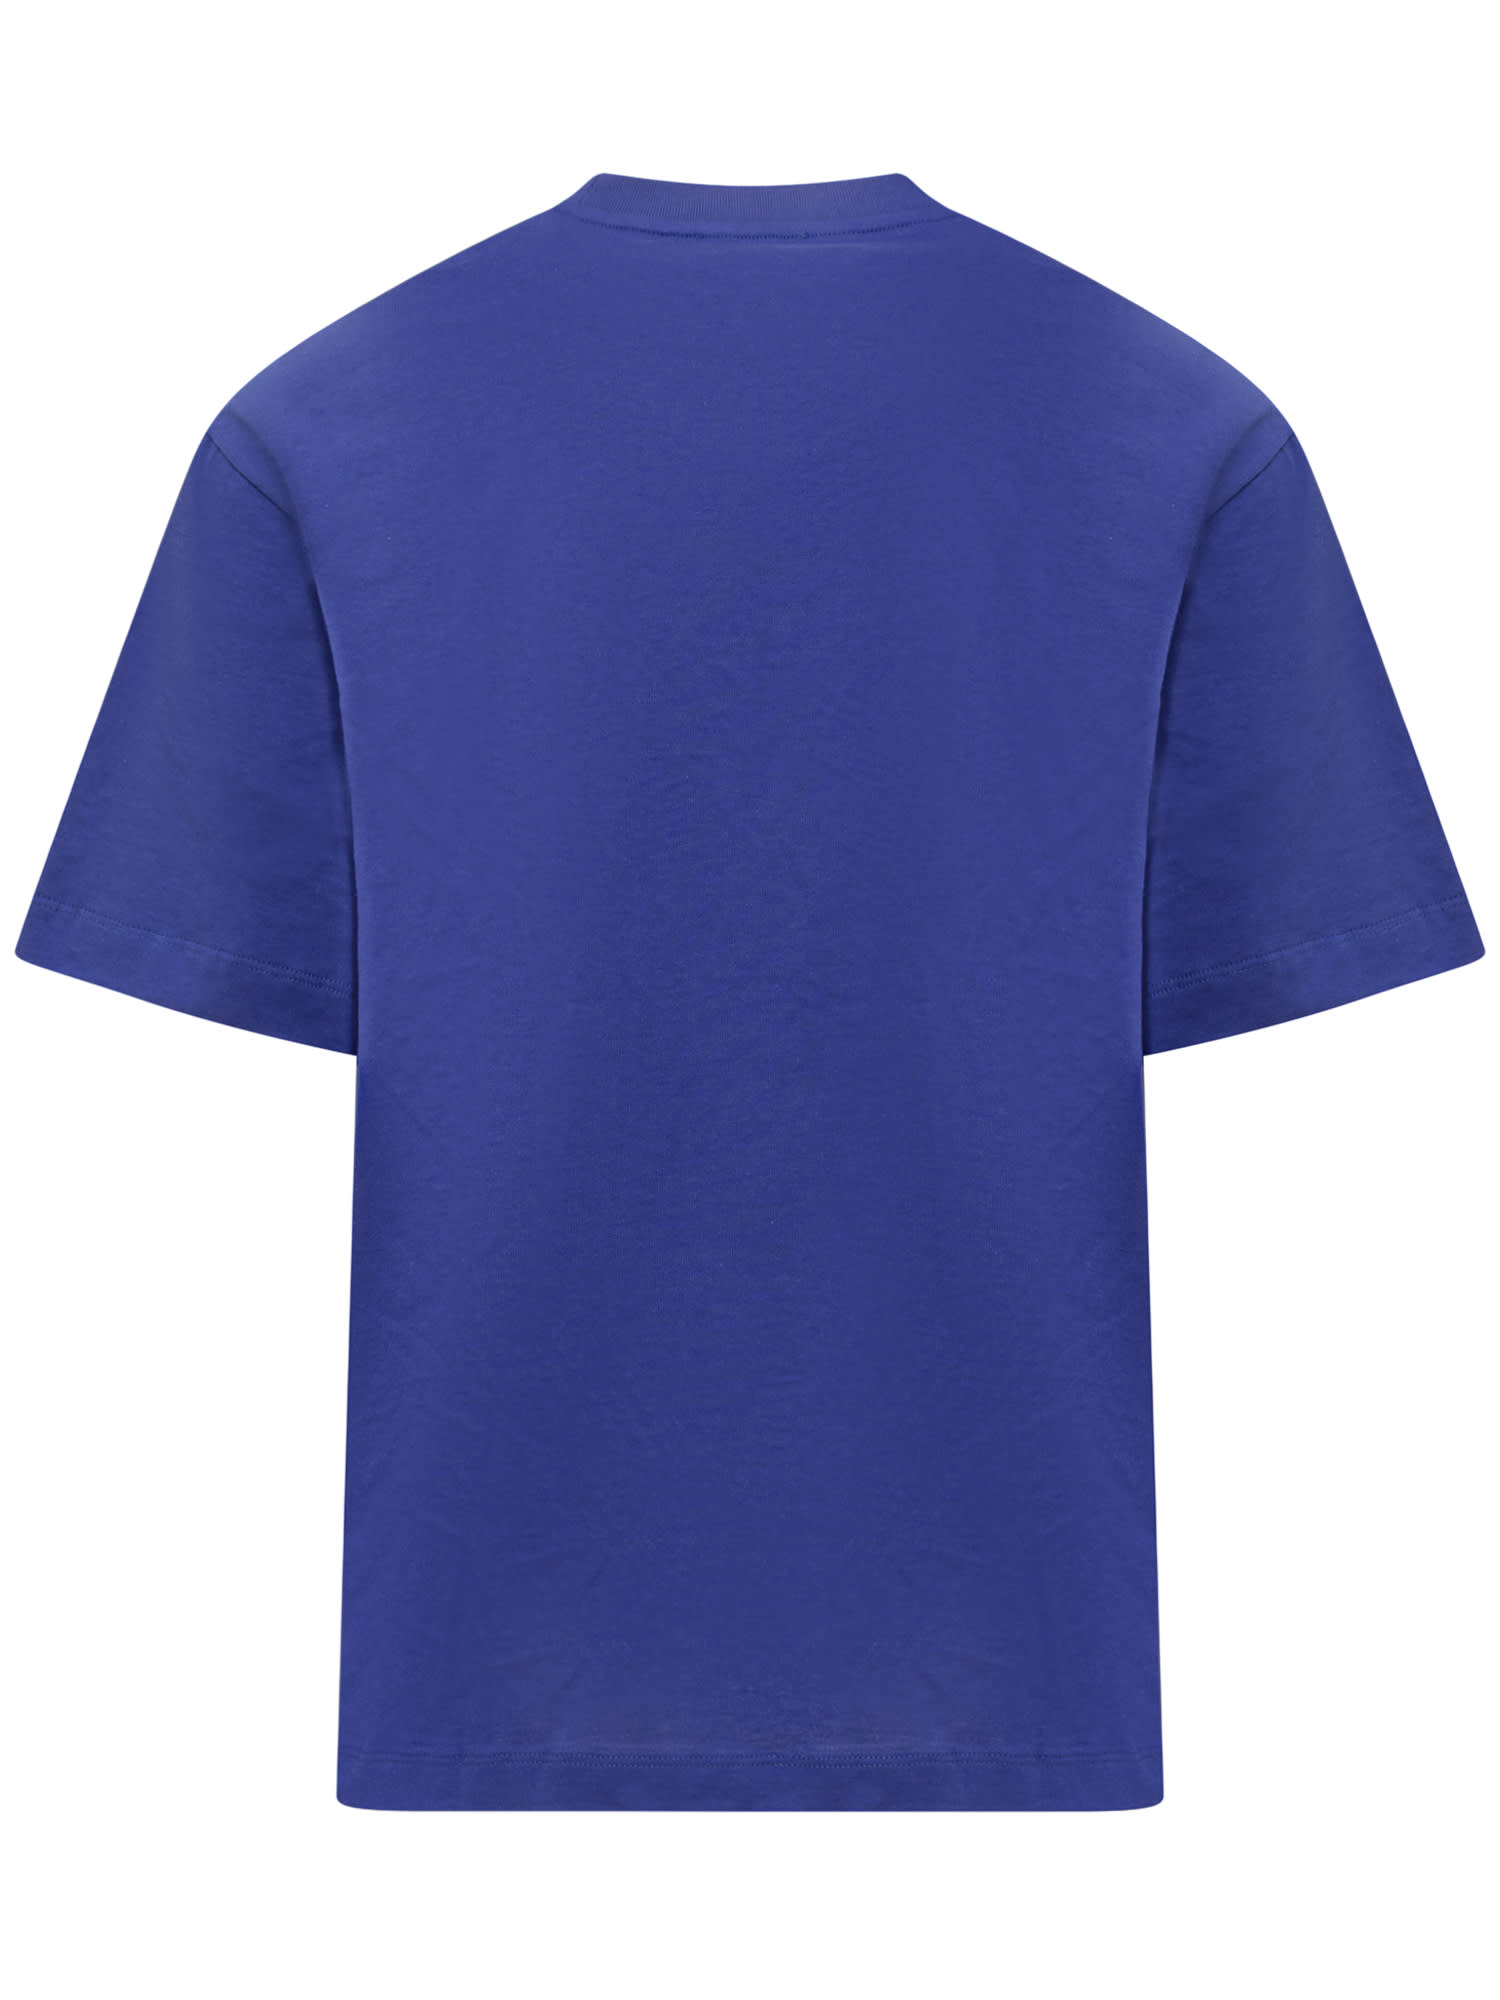 Shop Off-white Body Stitch T-shirt In Blue White